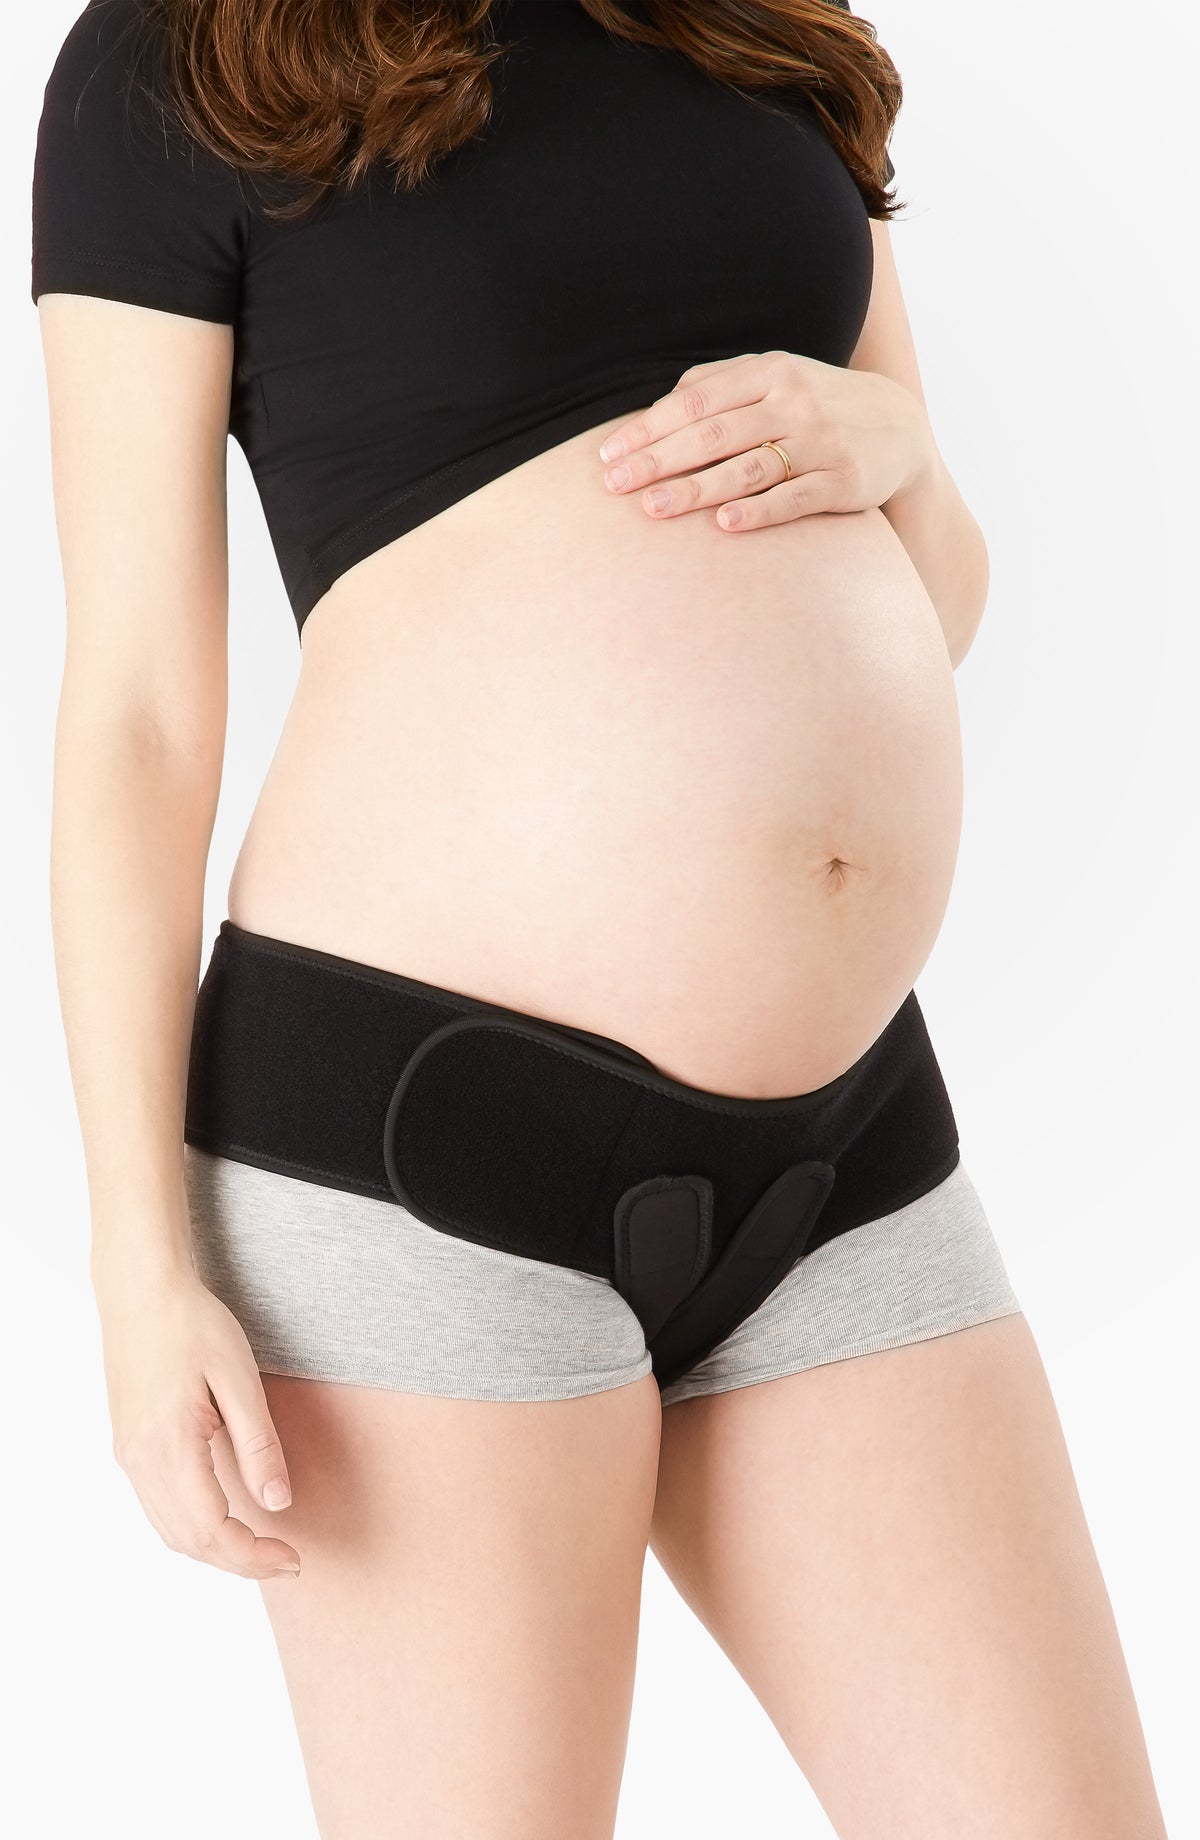 Vinayakart Prenatal Maternity Belt - Pregnancy Support - Waist